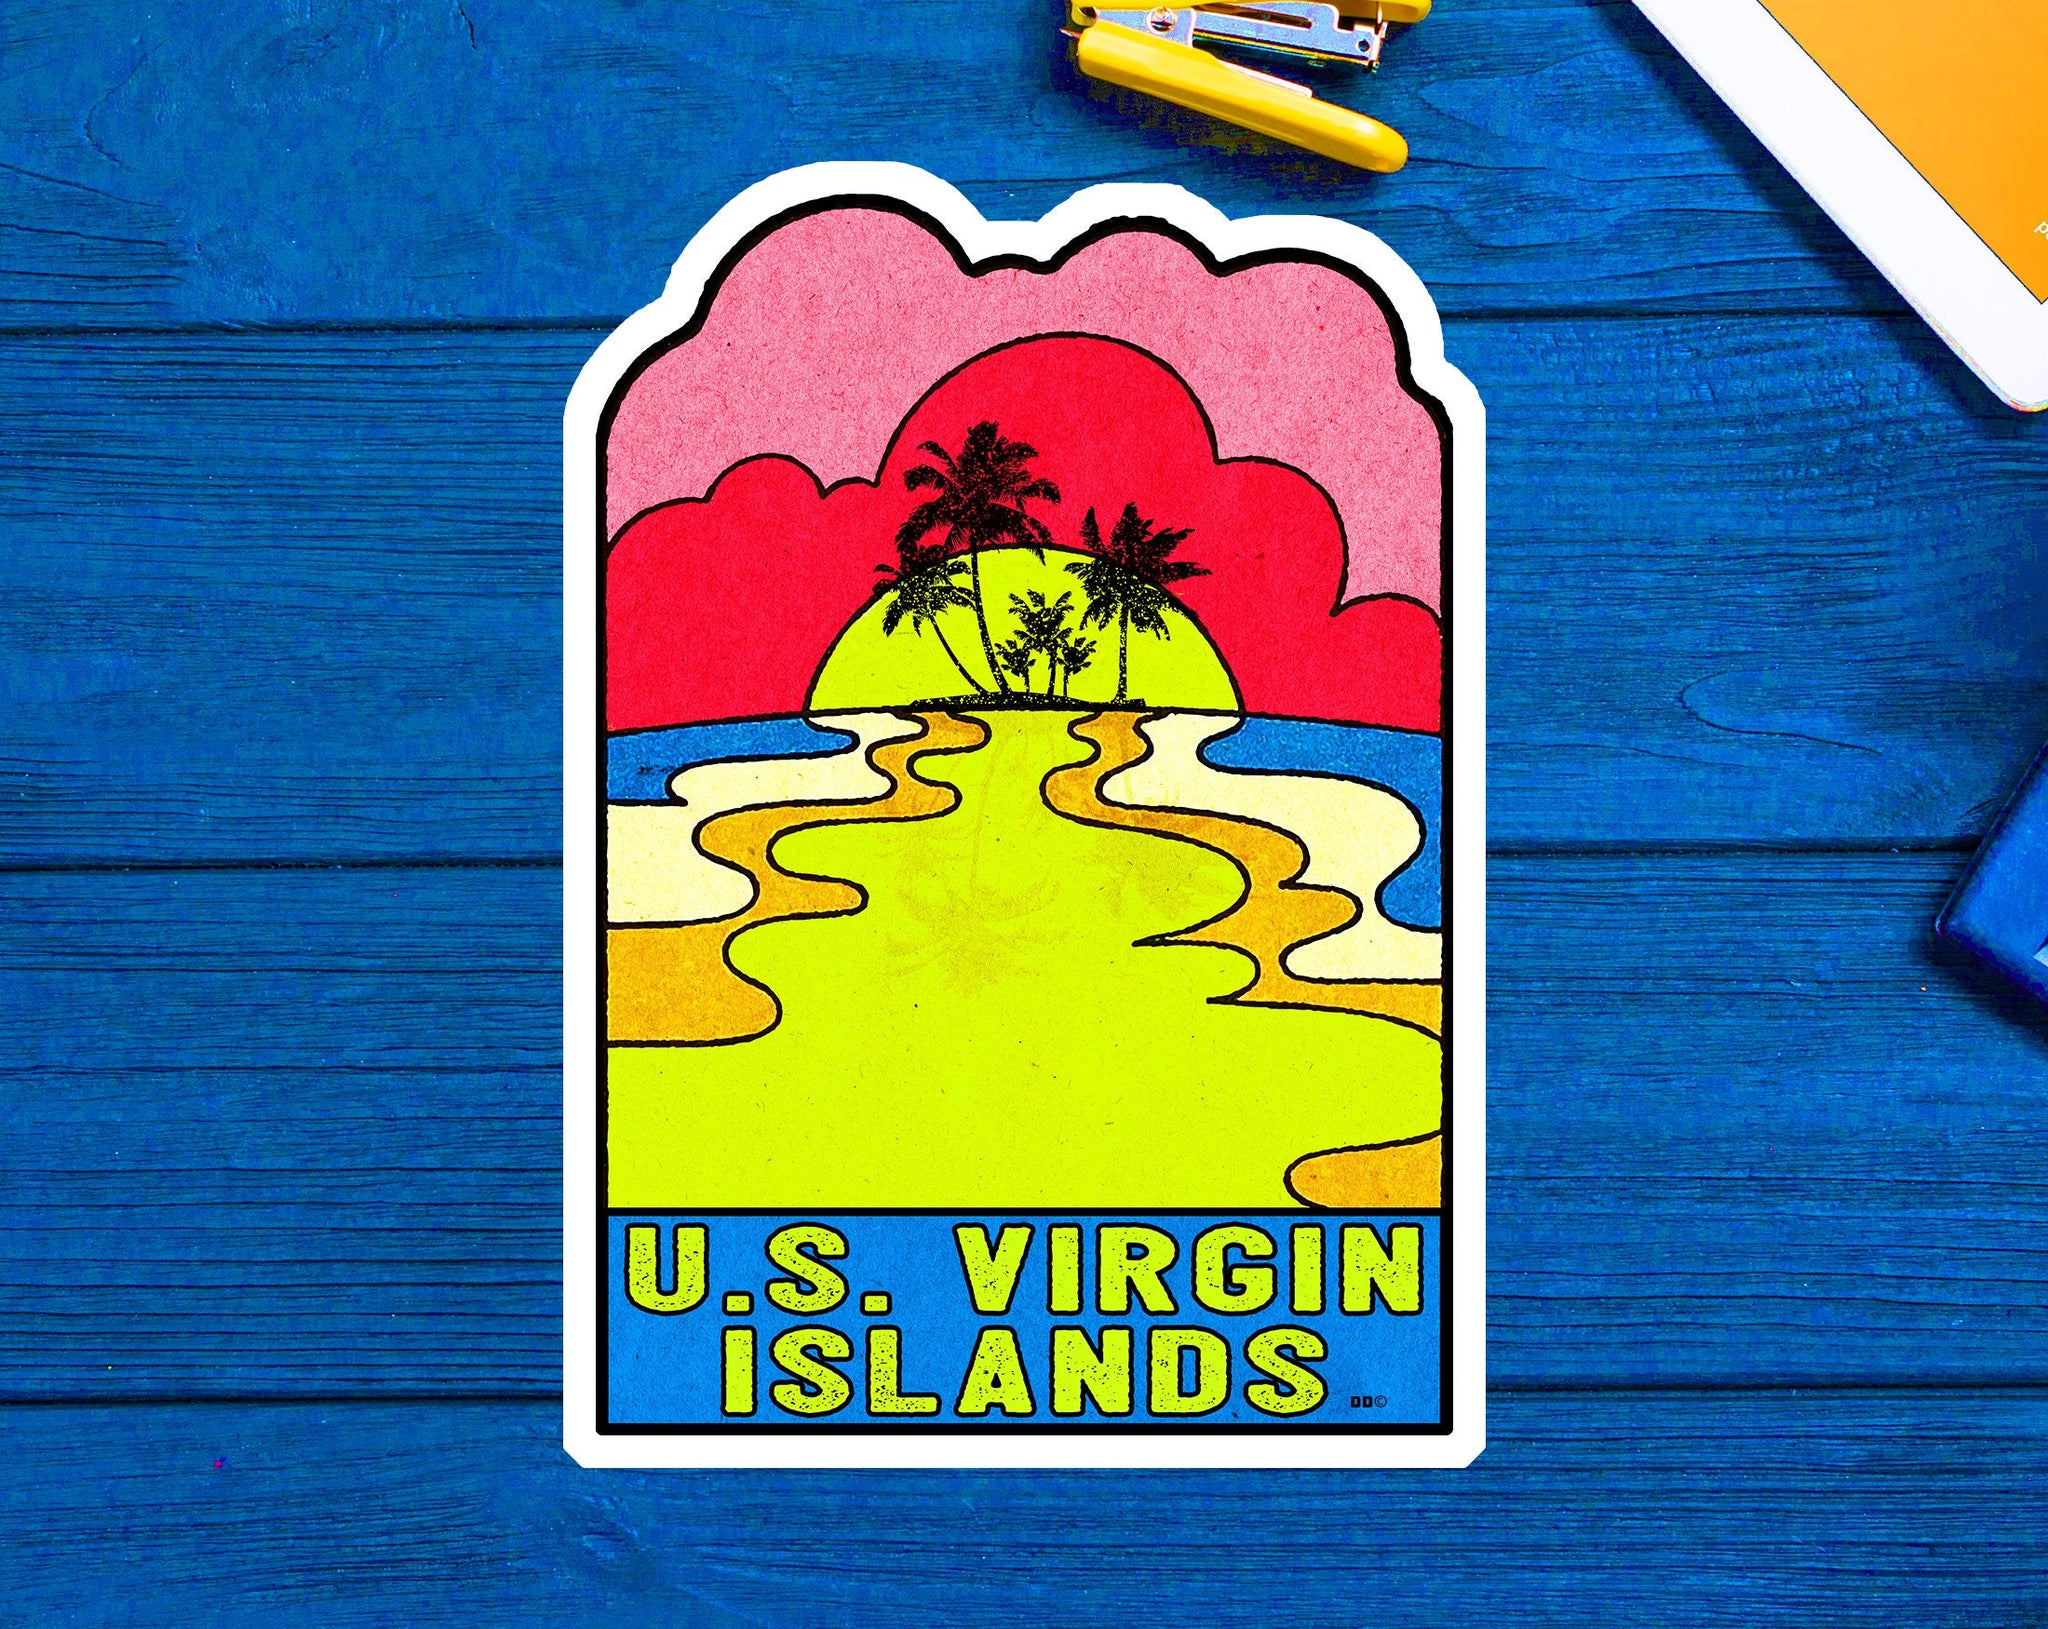 Virgin Islands Decal Sticker 3.75" x 2.7" Sunset Palm Trees United States Saint Thomas Croix John